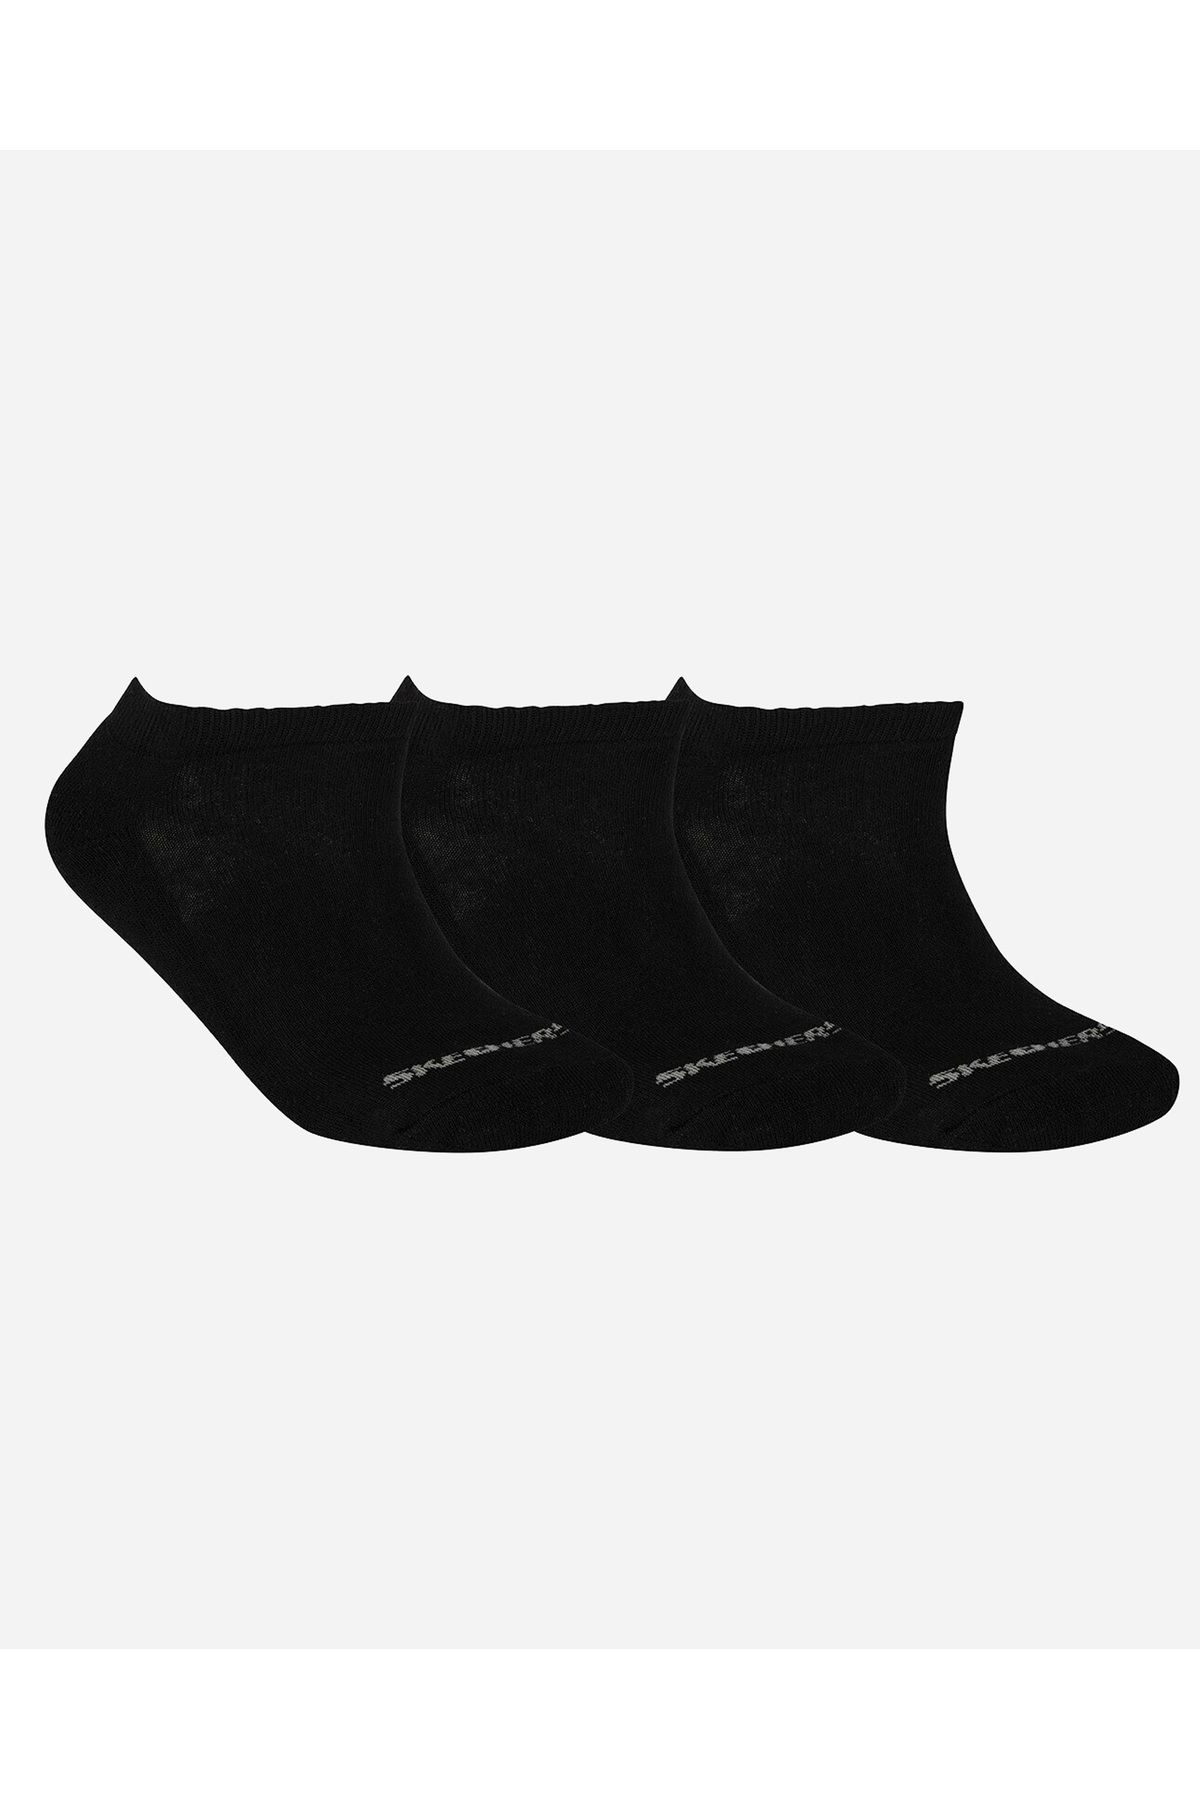 Skechers U Padded Low Cut Sock Unisex Siyah Çorap S192137-001